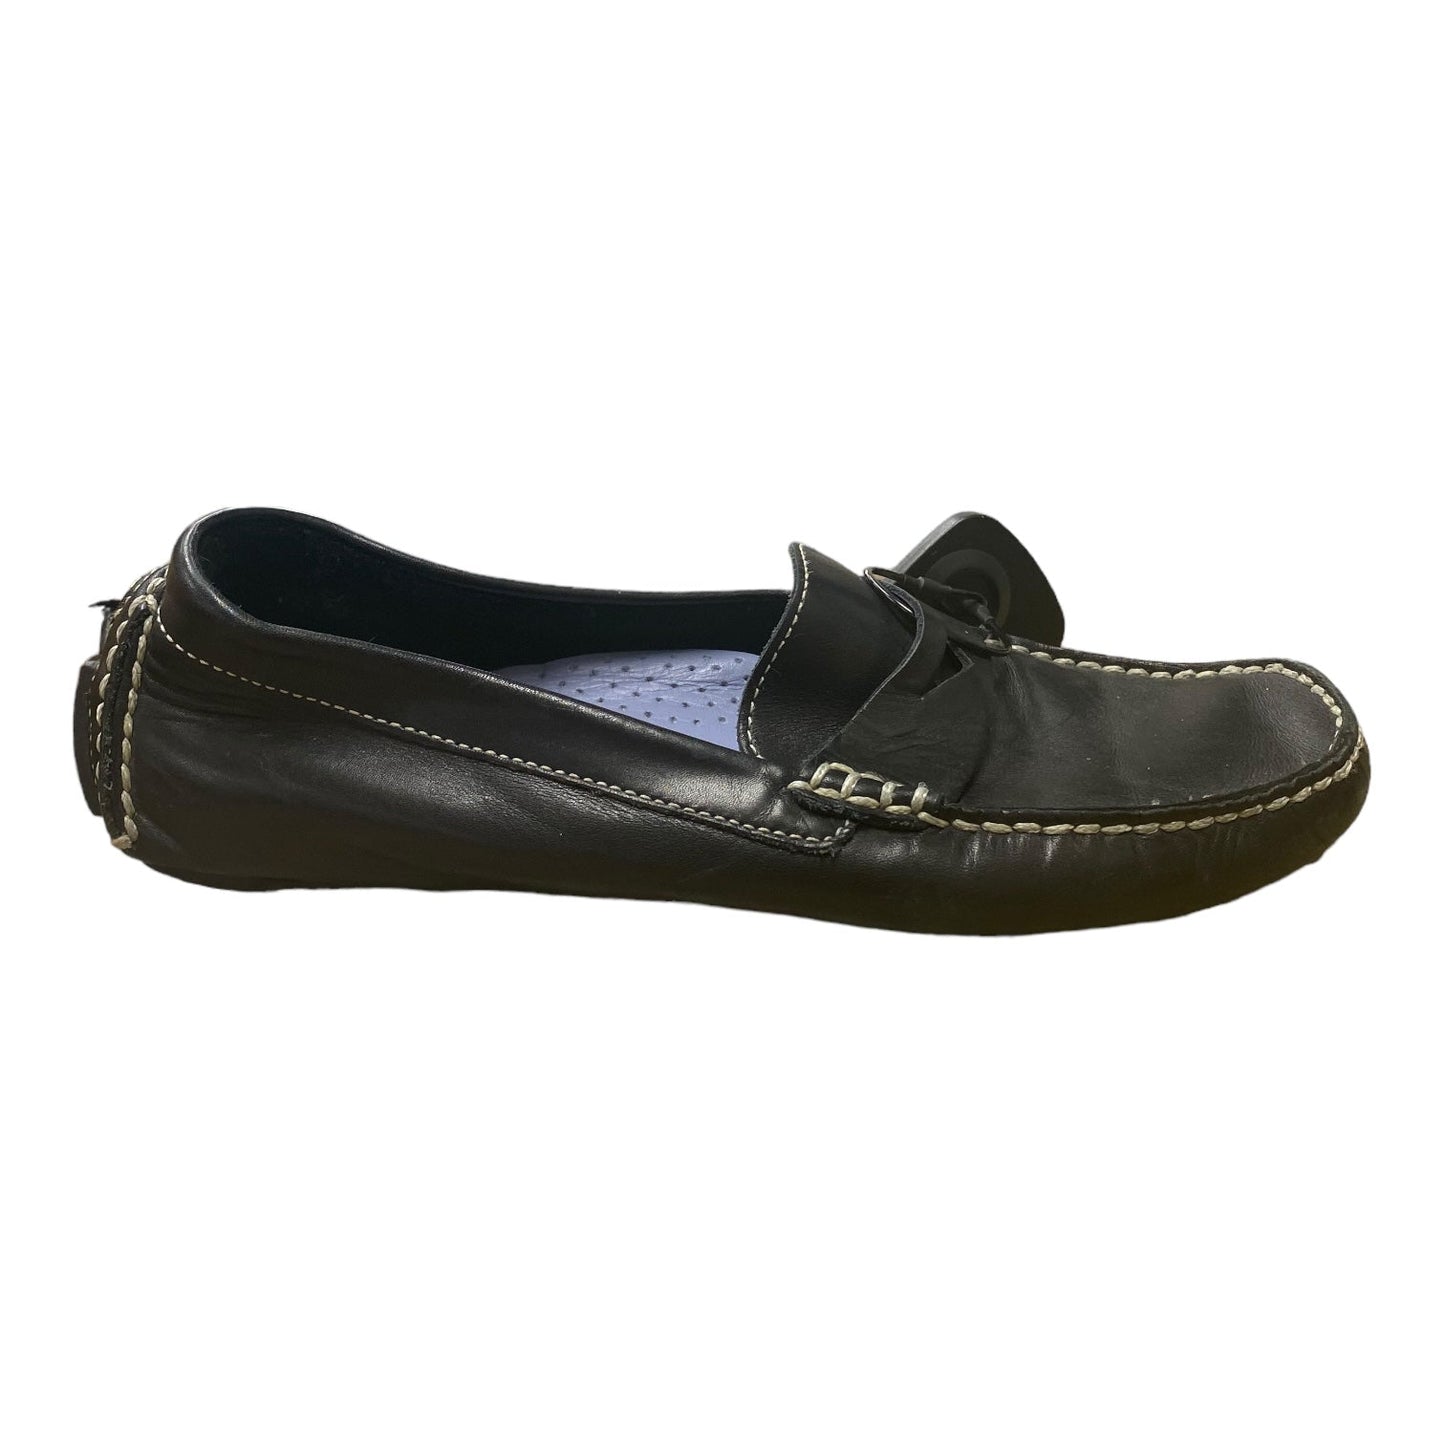 Black Shoes Flats Cole-haan, Size 7